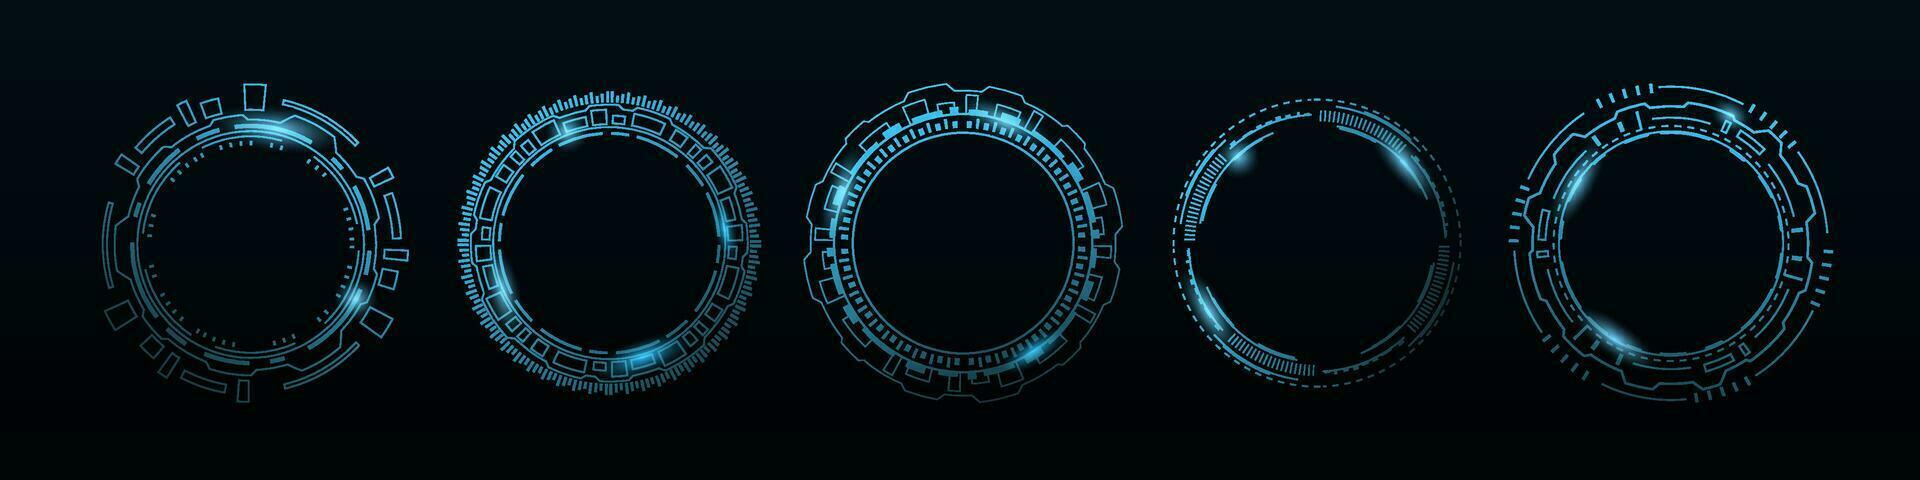 technologie bleu cyber hud futuriste cercle Cadre. futur La technologie ai technologie vecteur